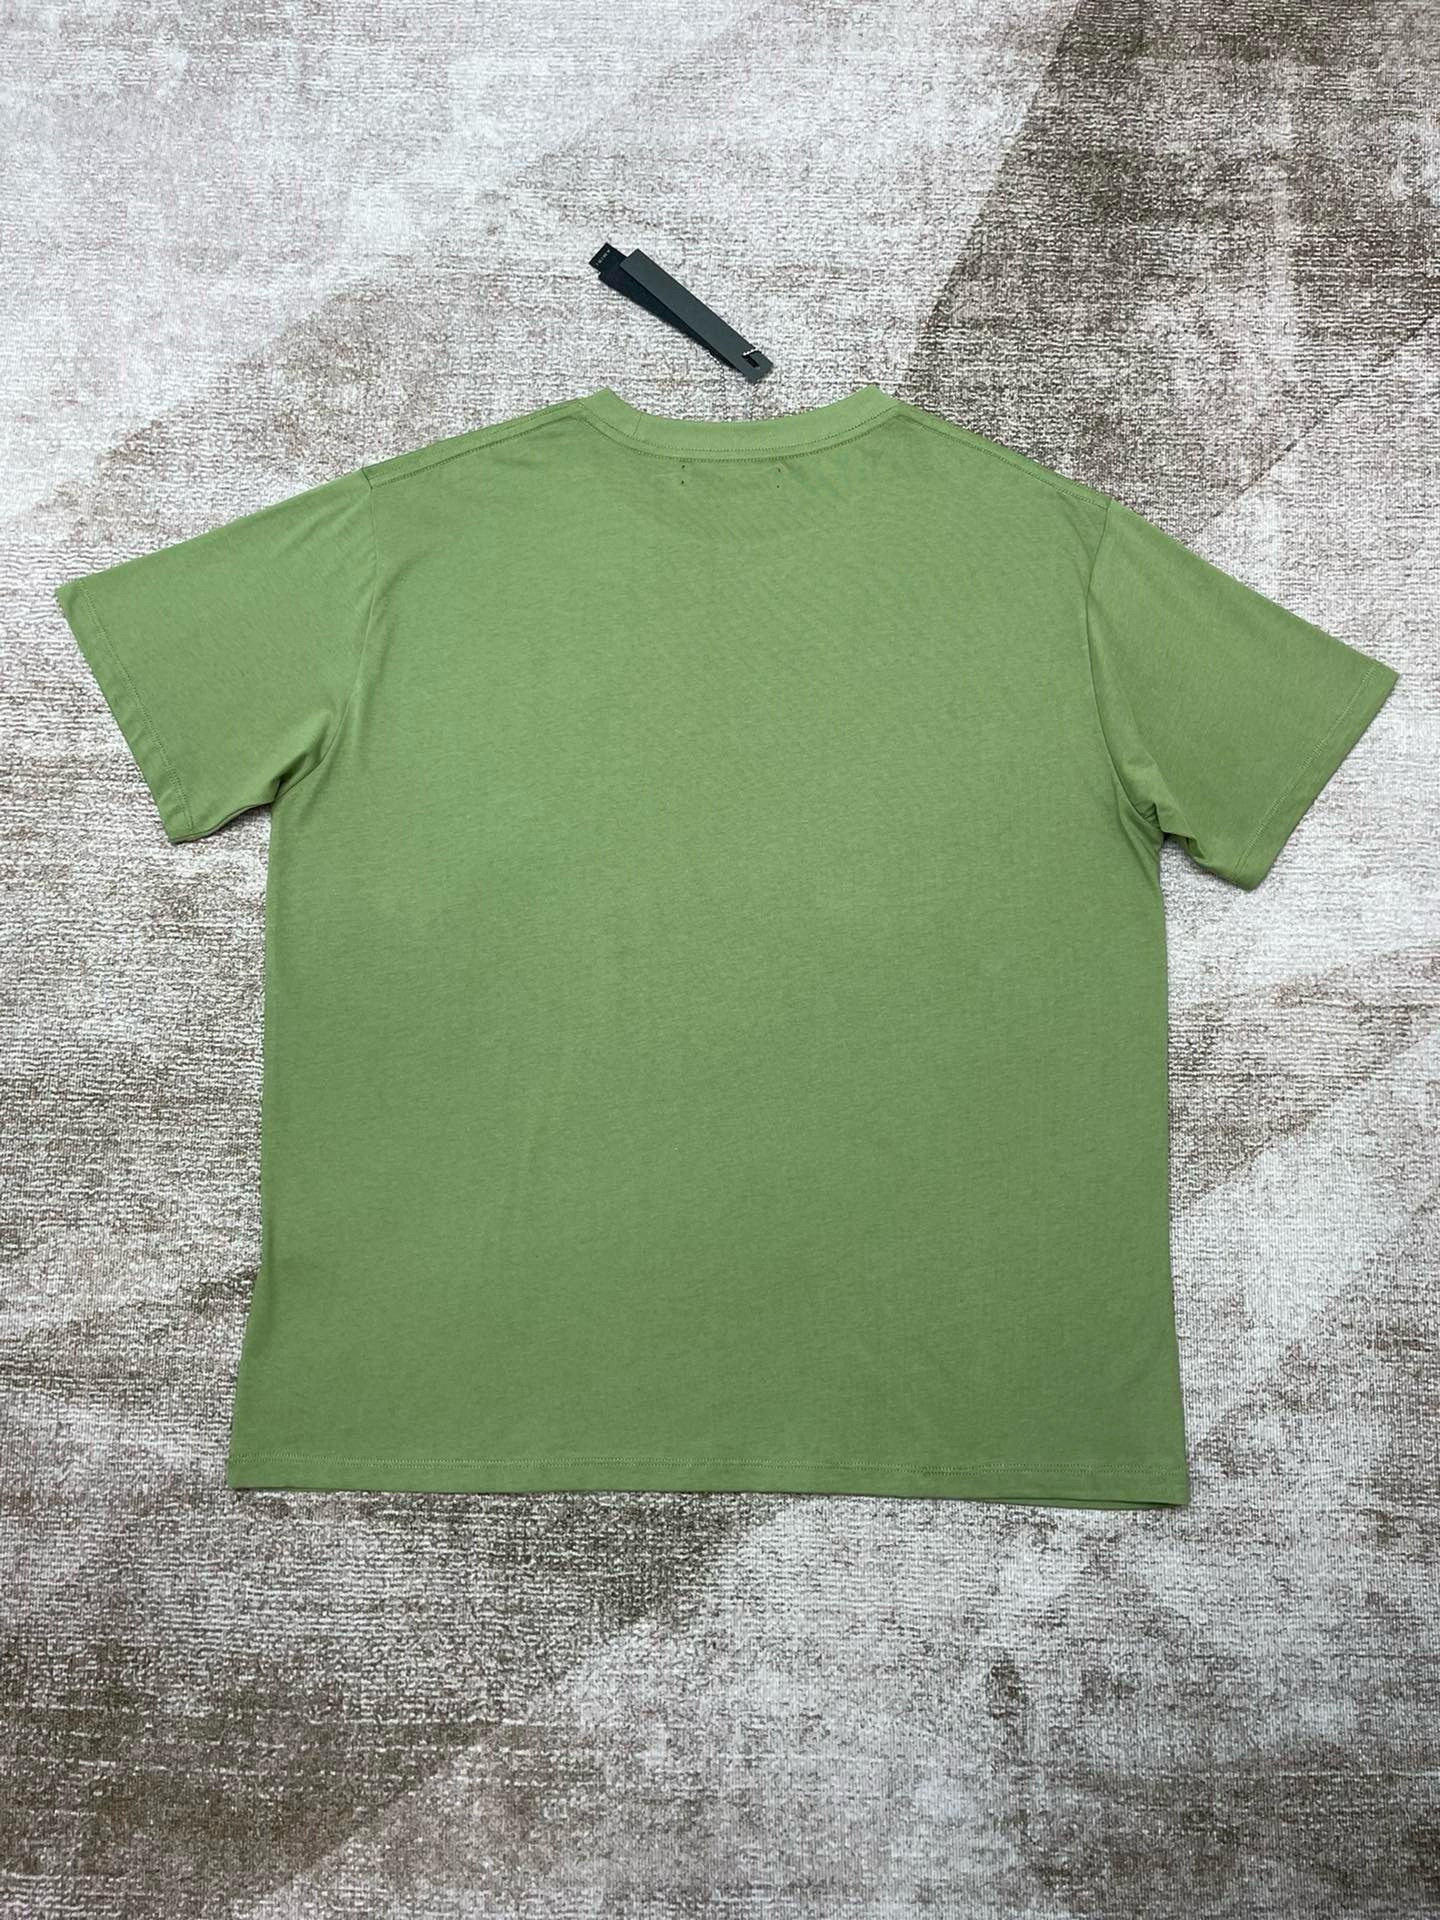 Green, White and Balck T-shirt